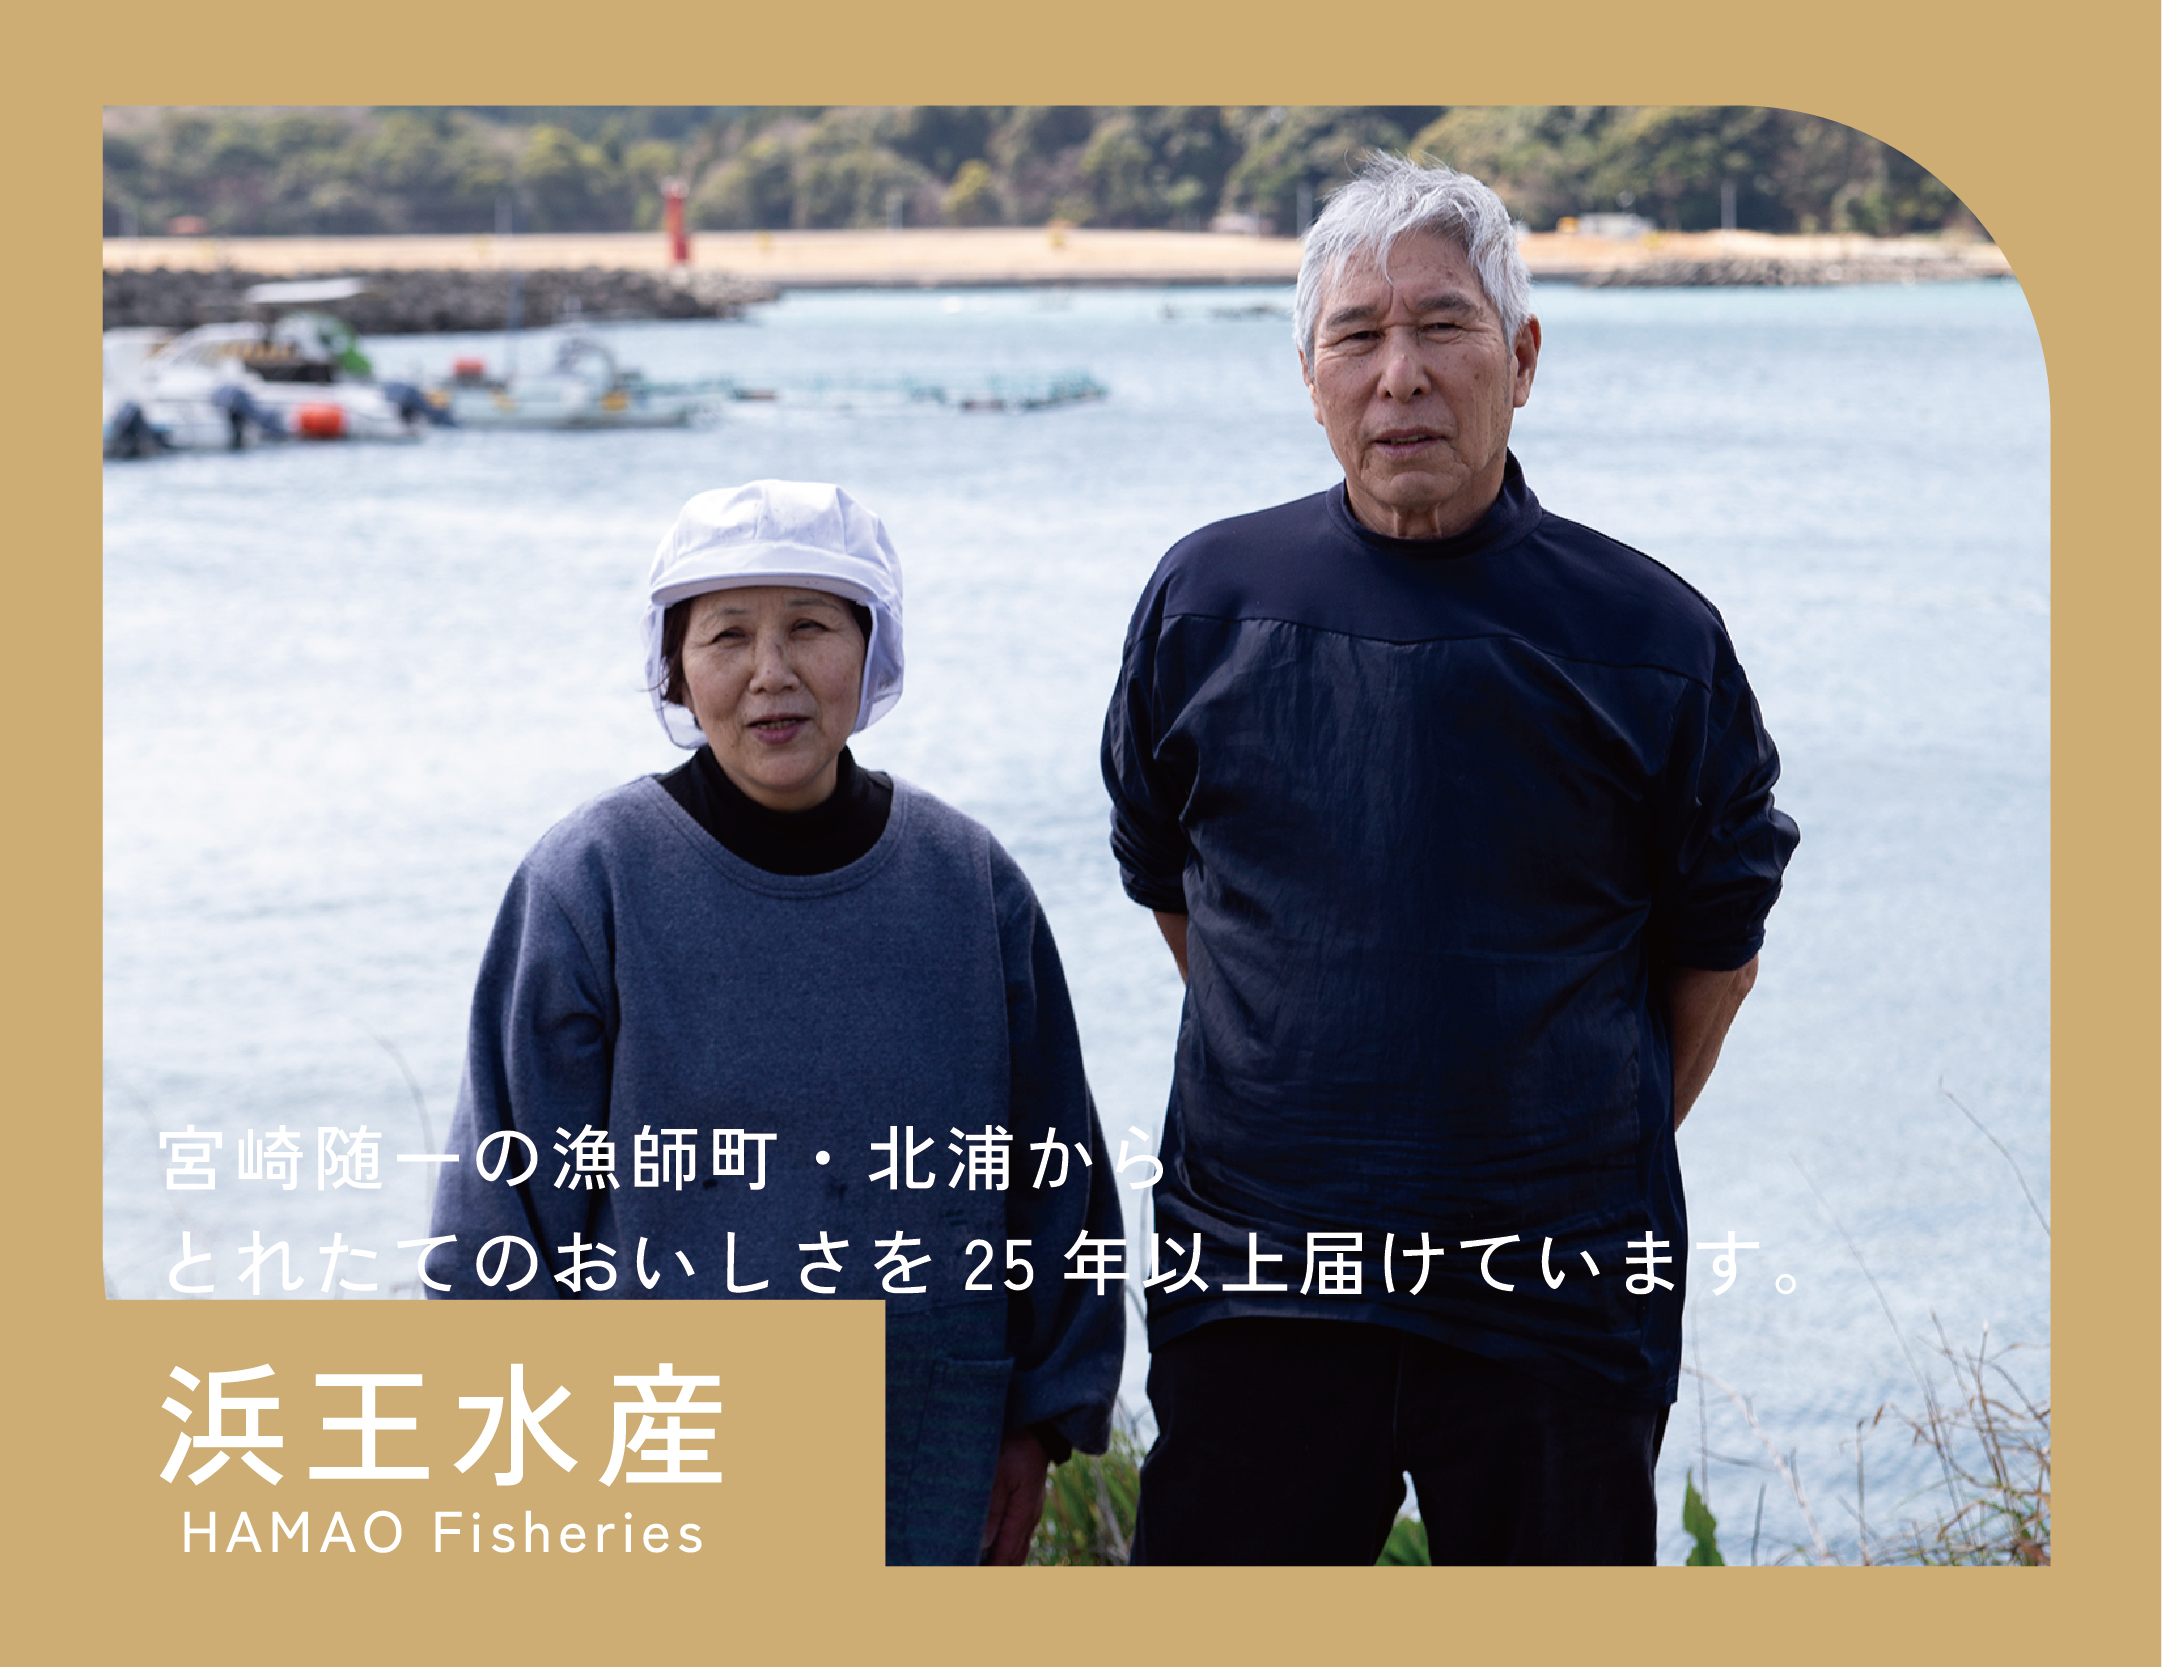 Hamao Fisheries